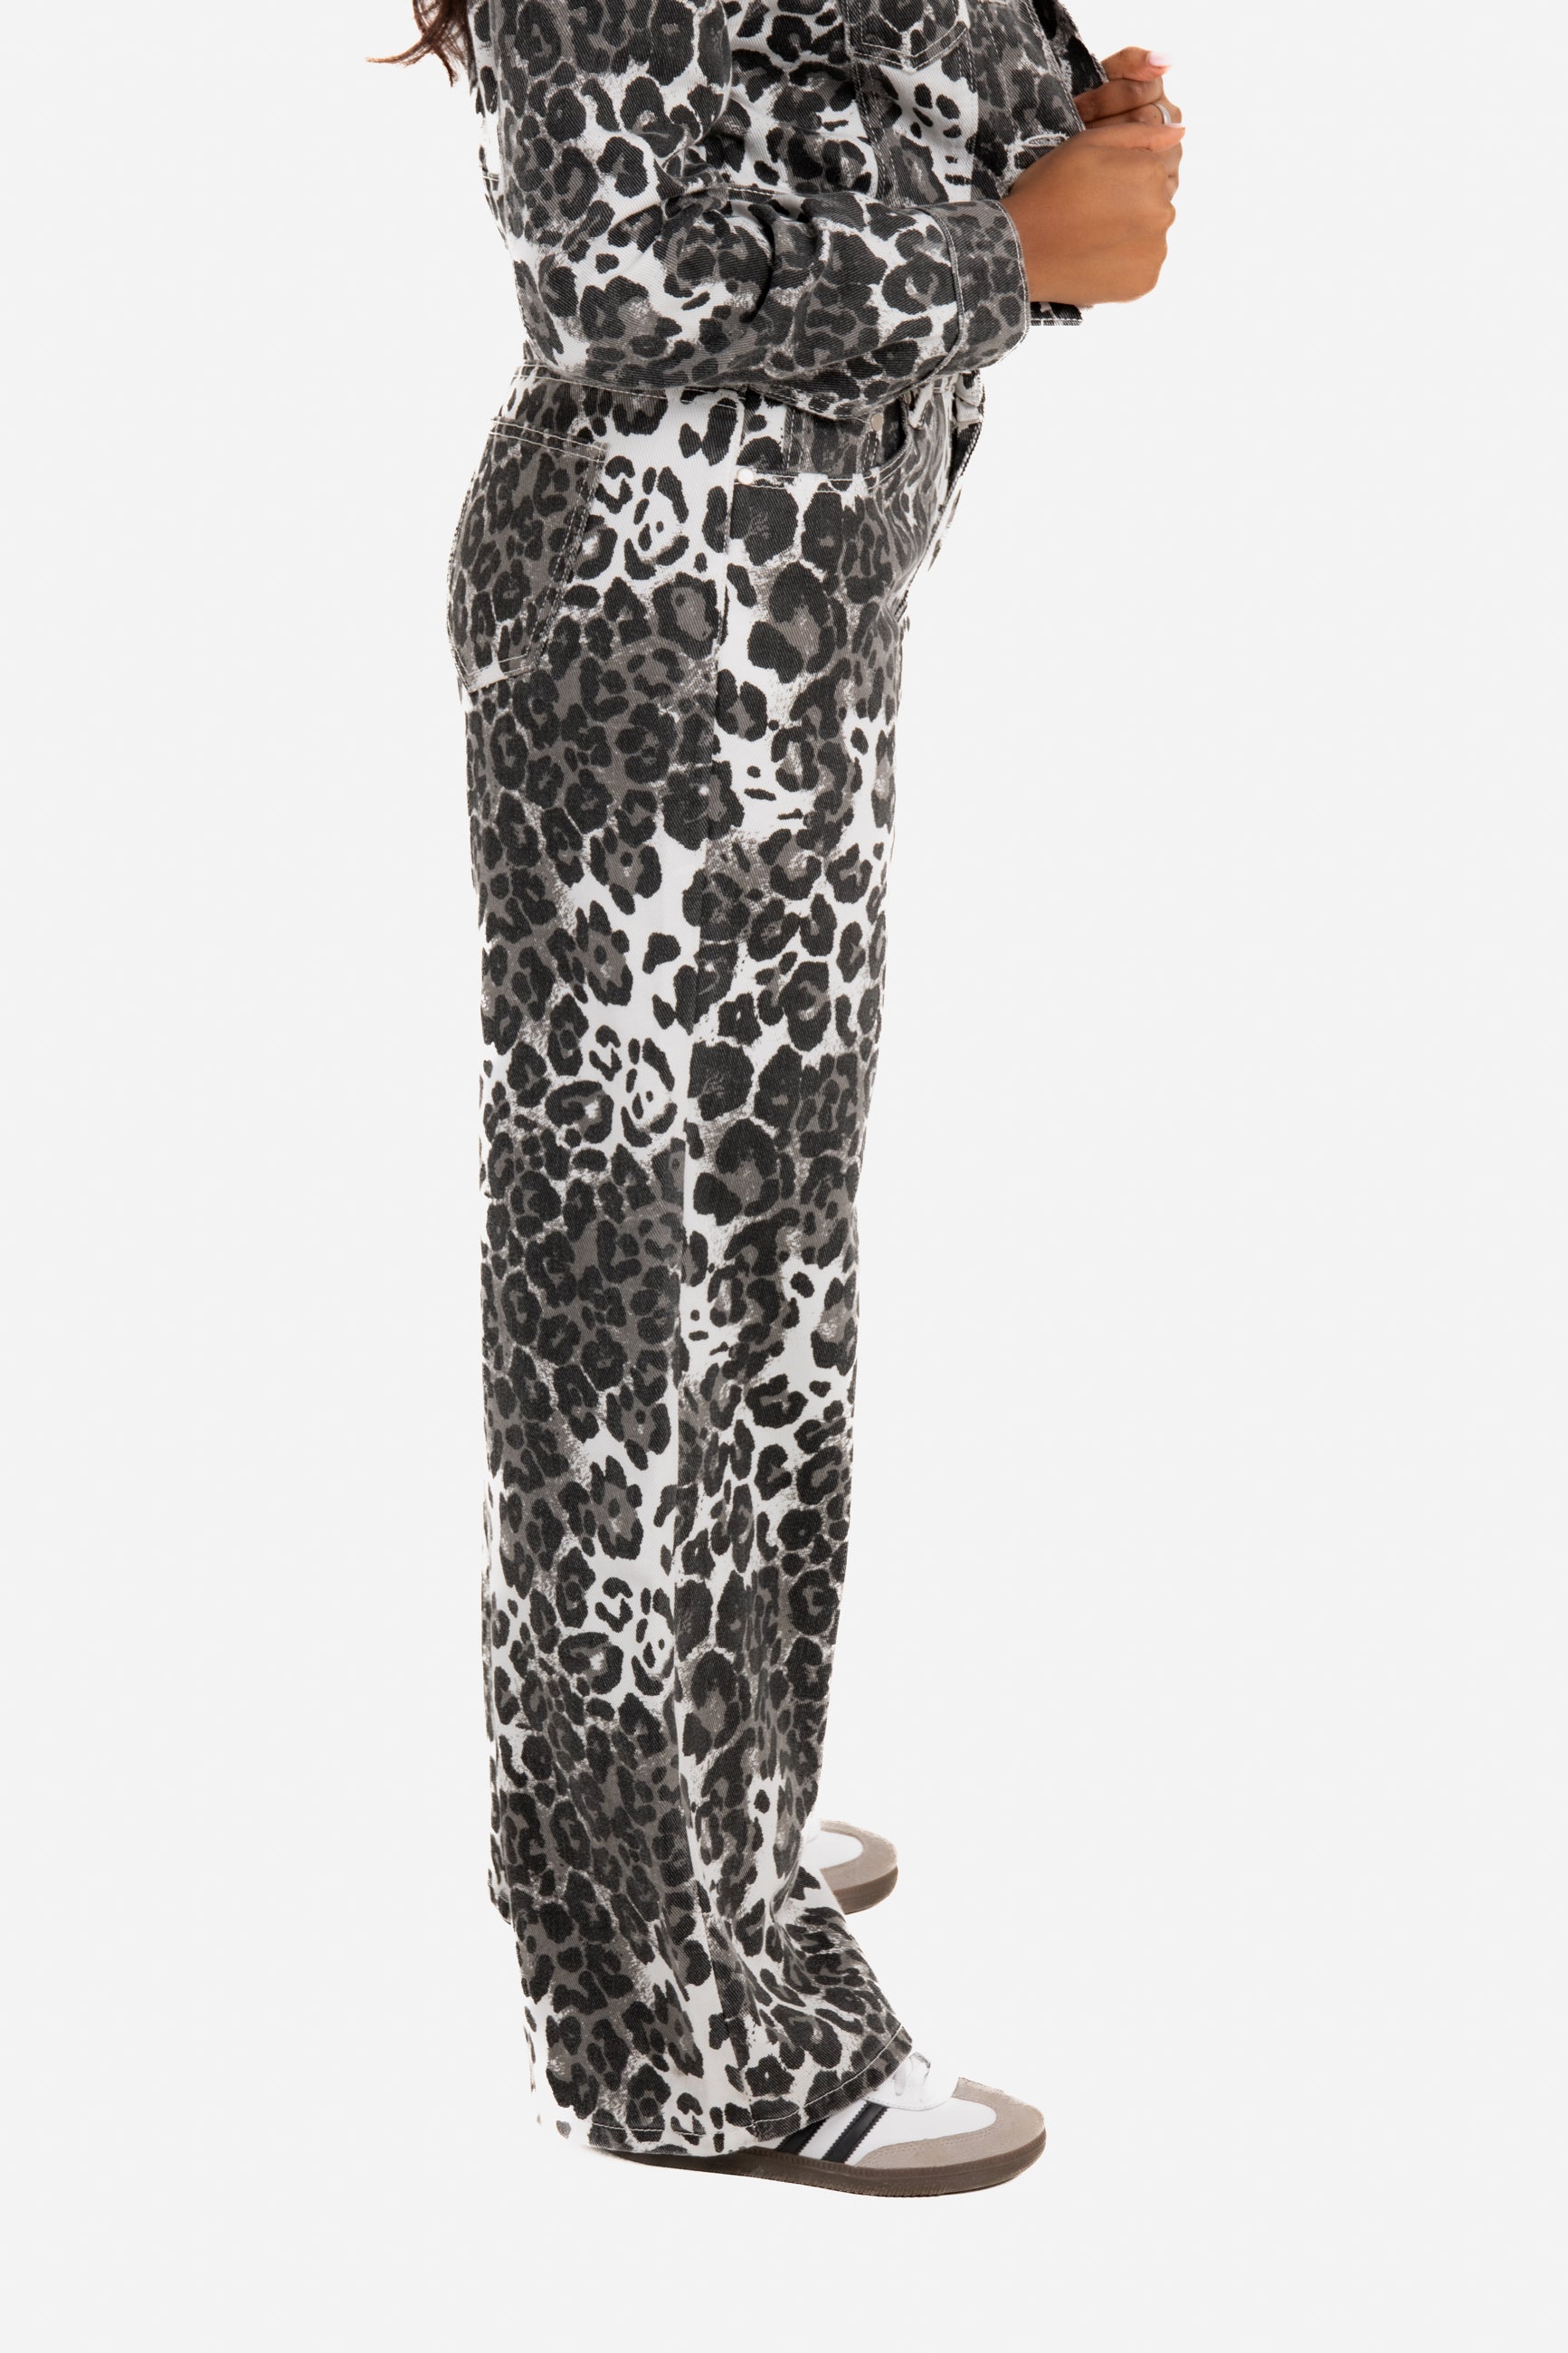 Leopard Print Wide Leg Jeans